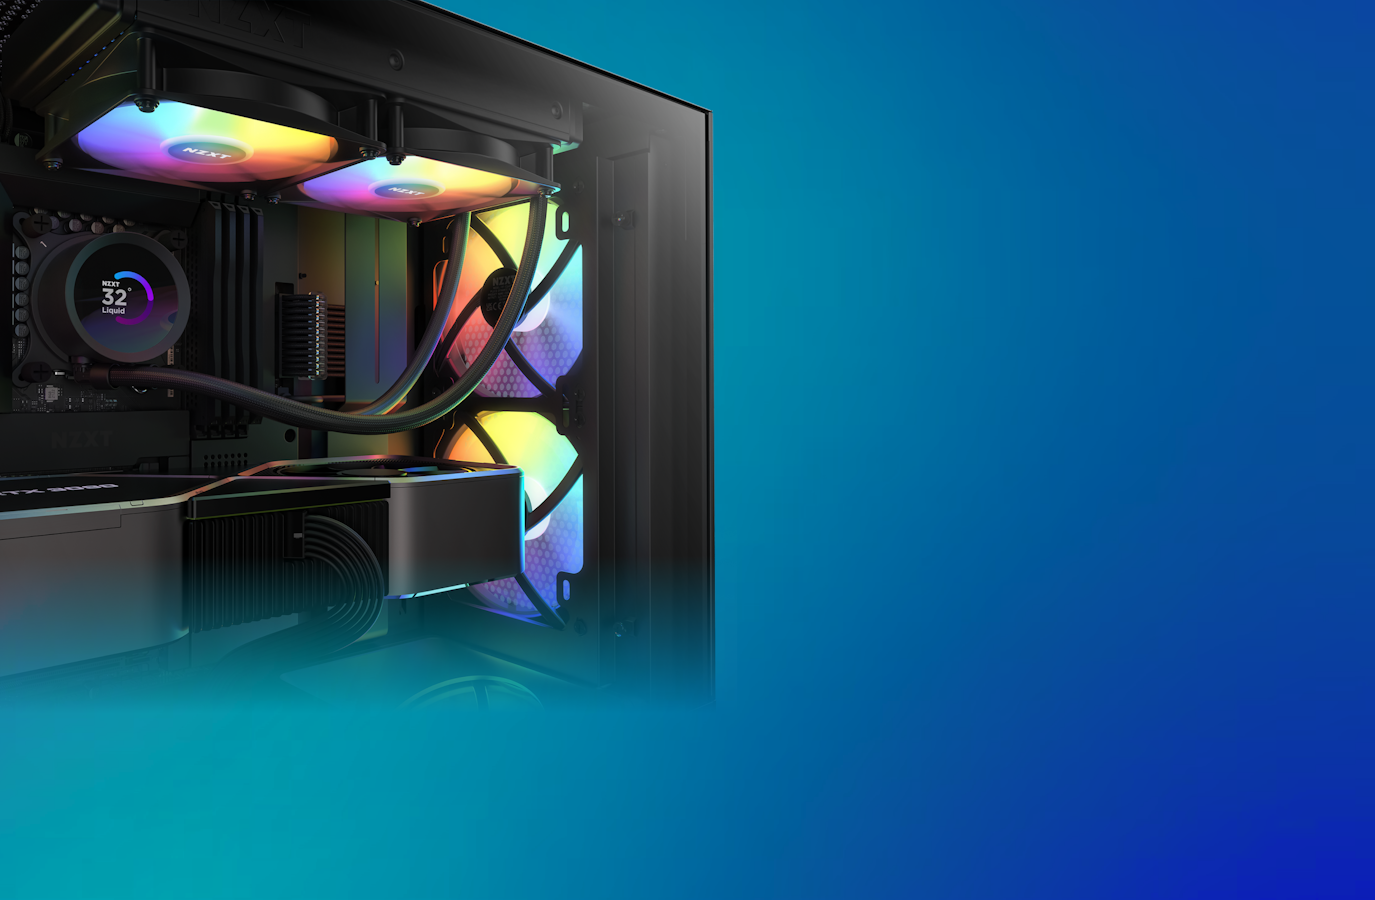 NZXT F120 RGB Duo Triple Pack black - Next Level PC